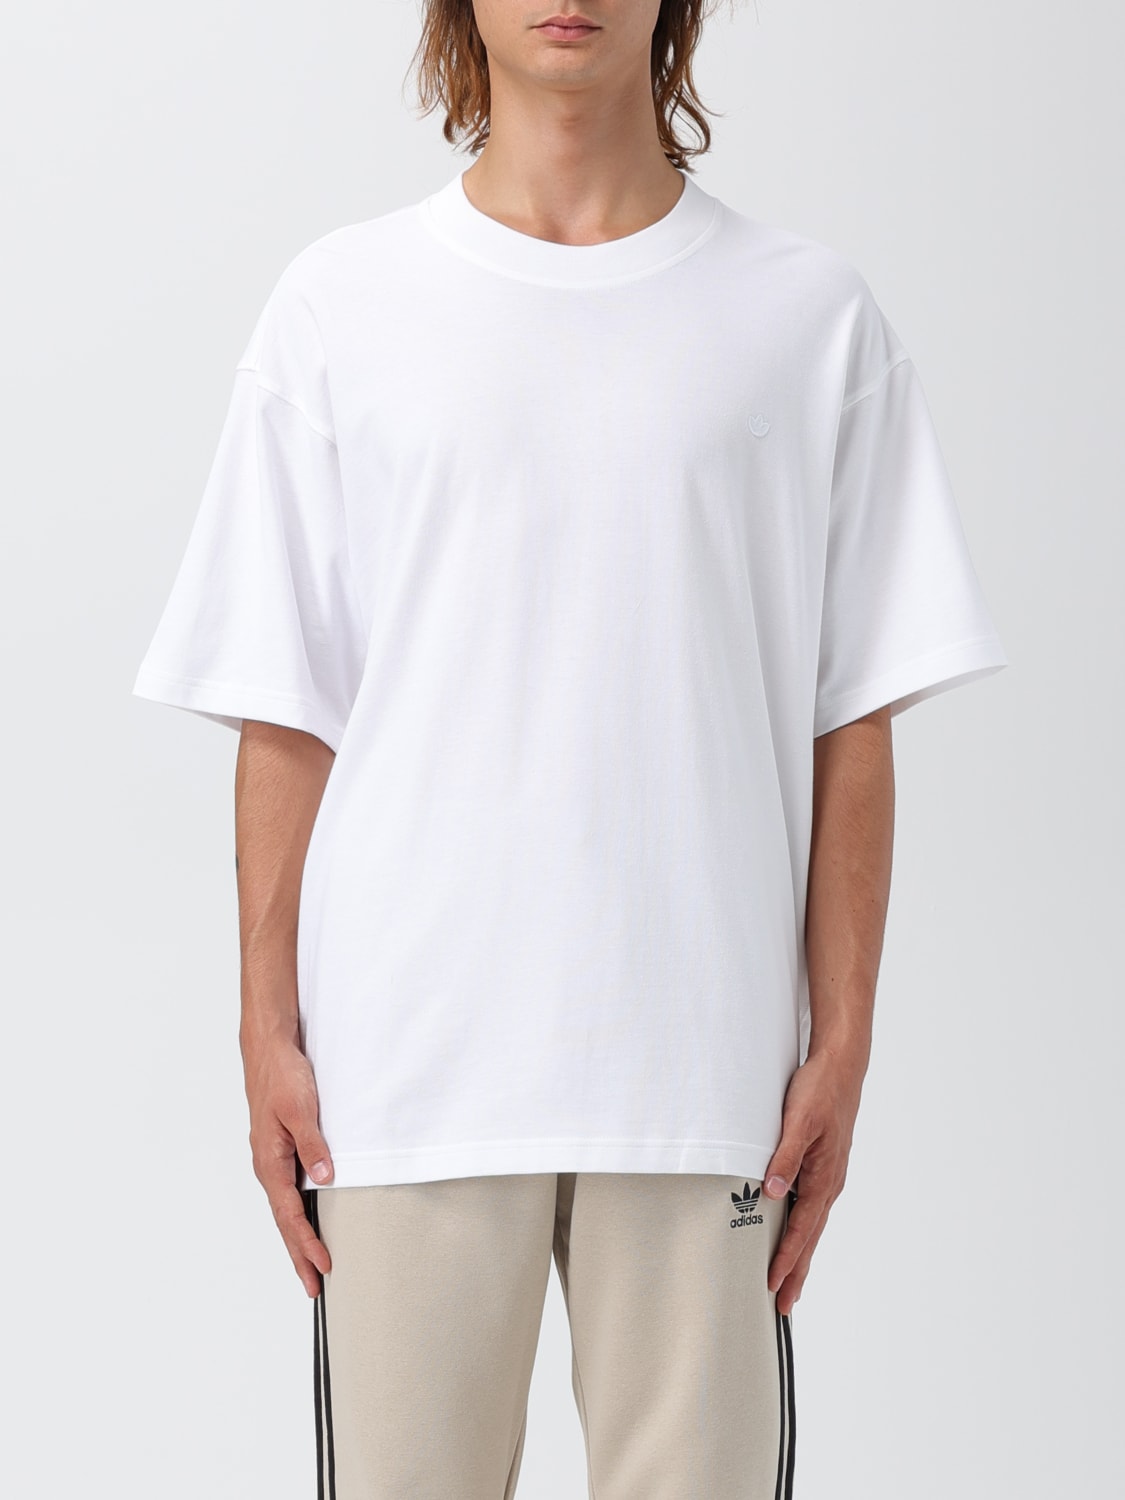 Originals | ORIGINALS: Adidas online with ADIDAS t- logo White t-shirt cotton - at IM4388 shirt